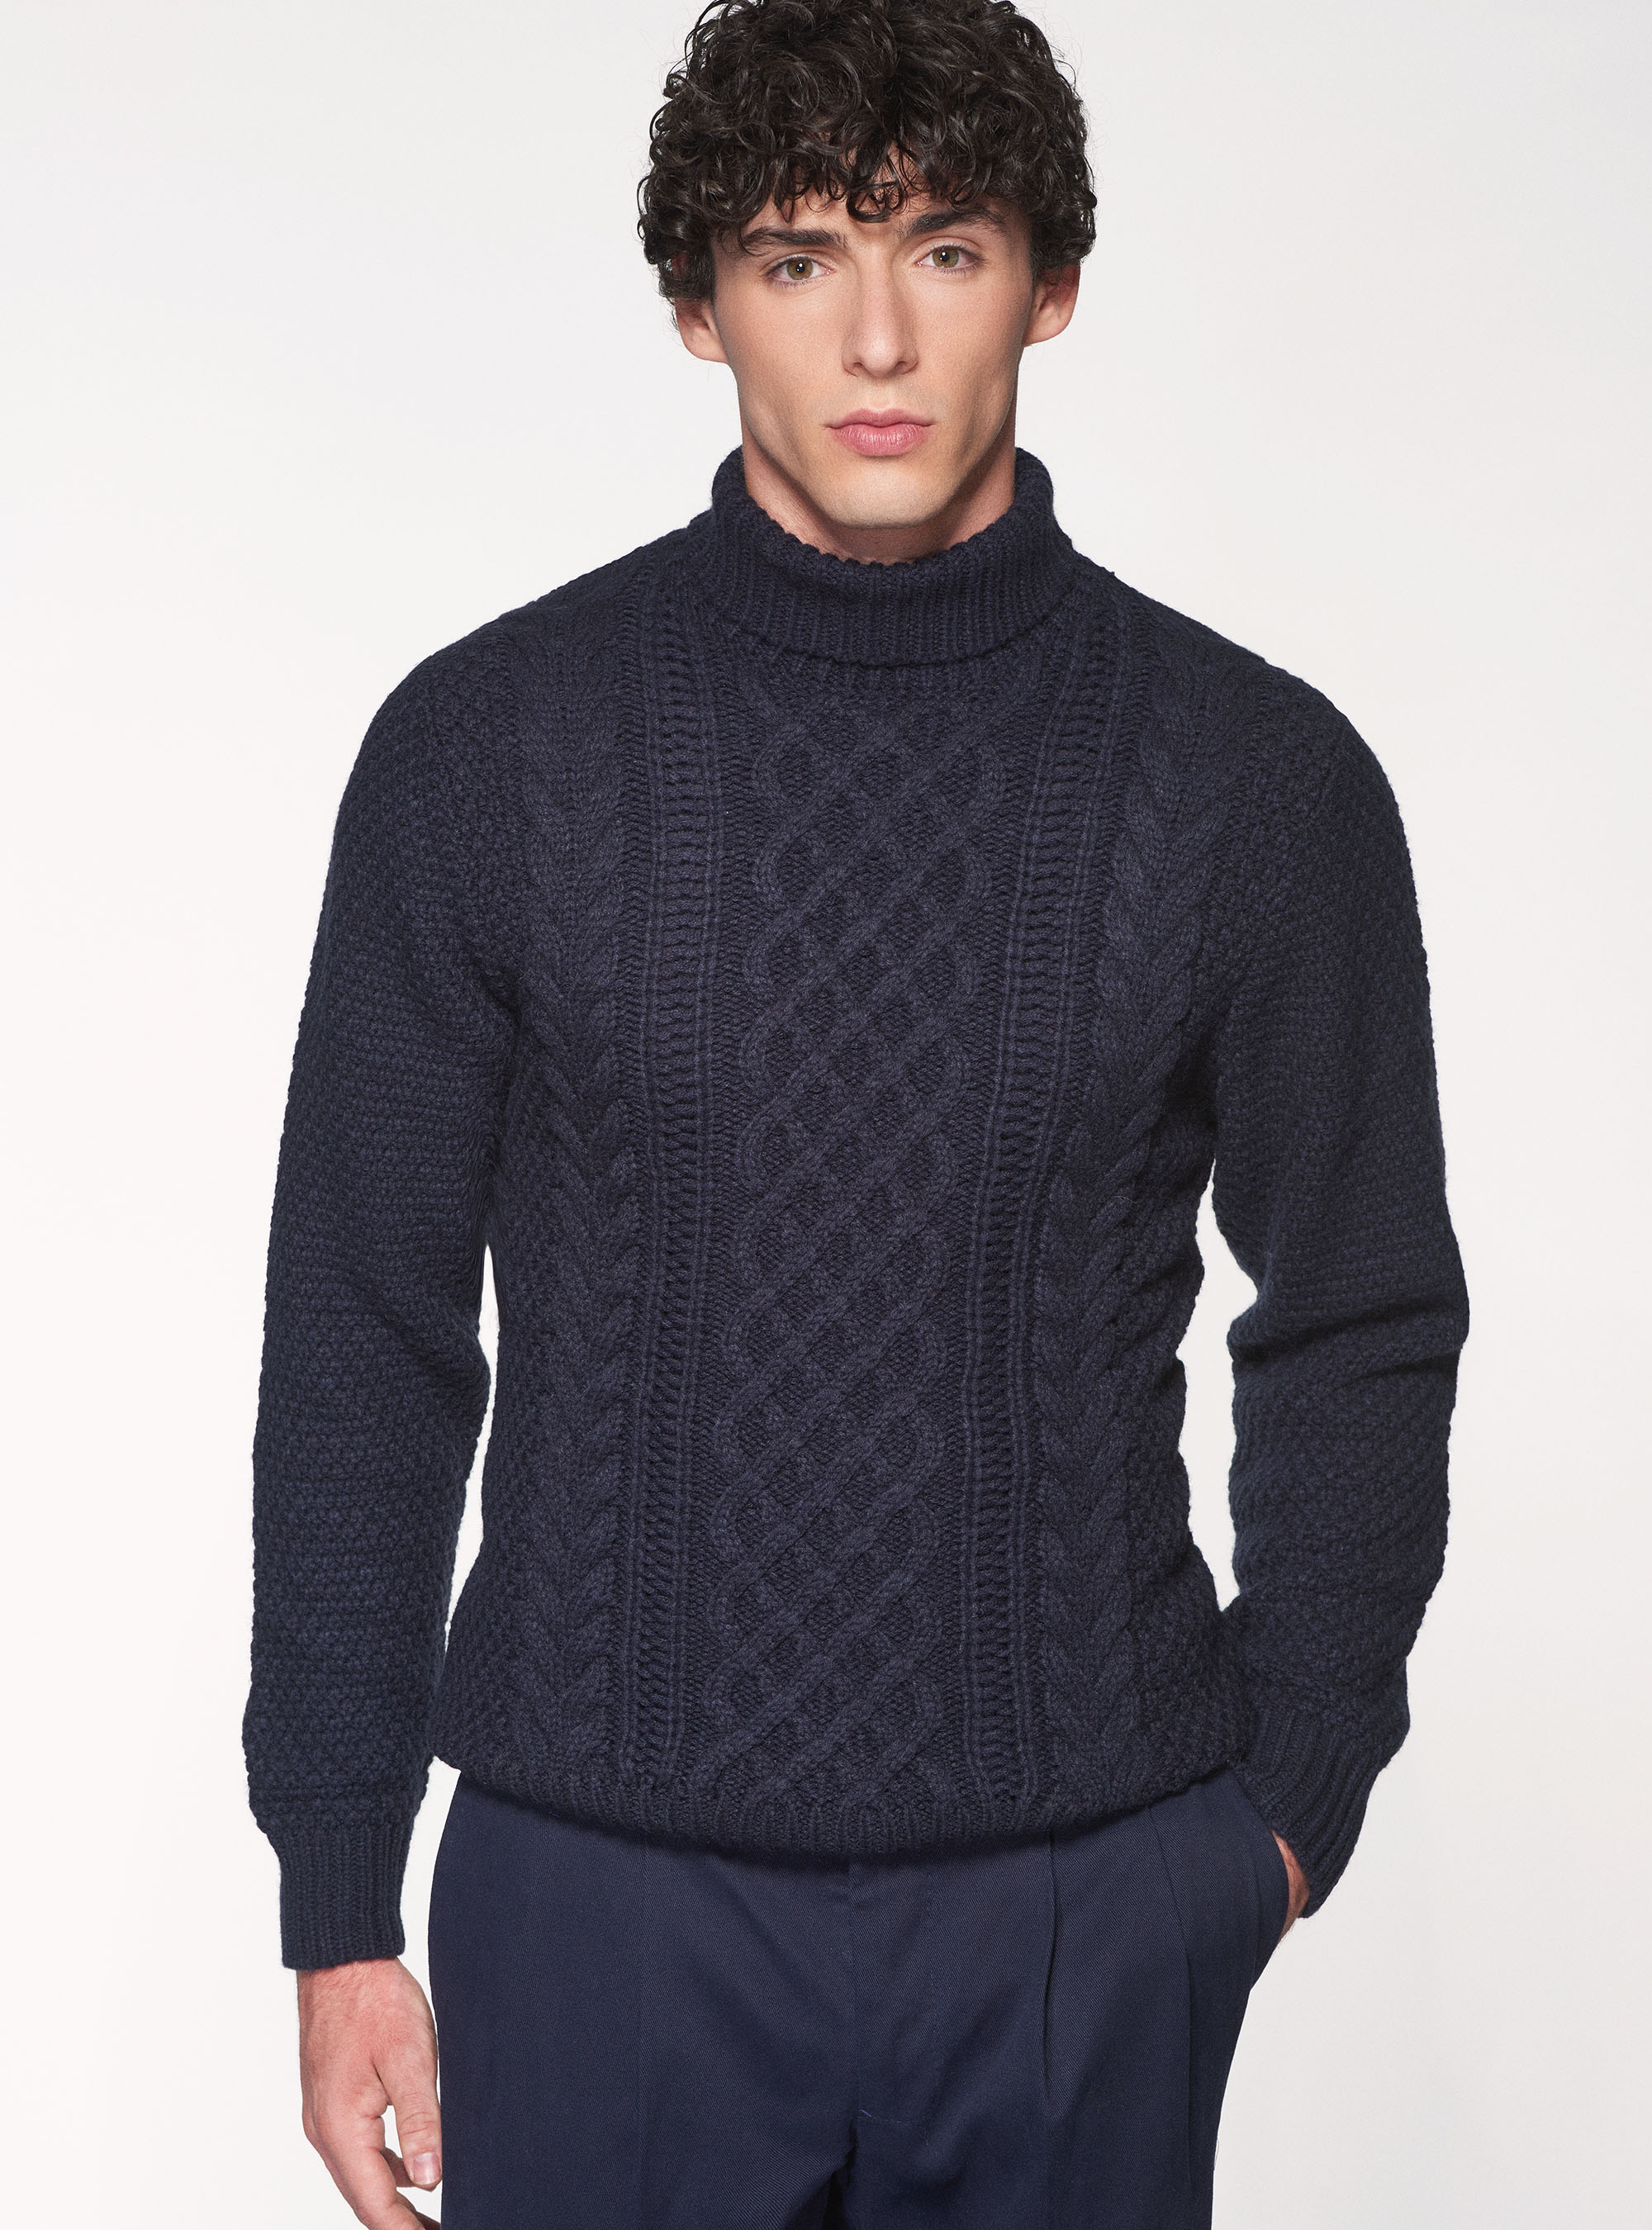 Braided wool blend turtleneck sweater | GutteridgeEU | Men's catalog ...